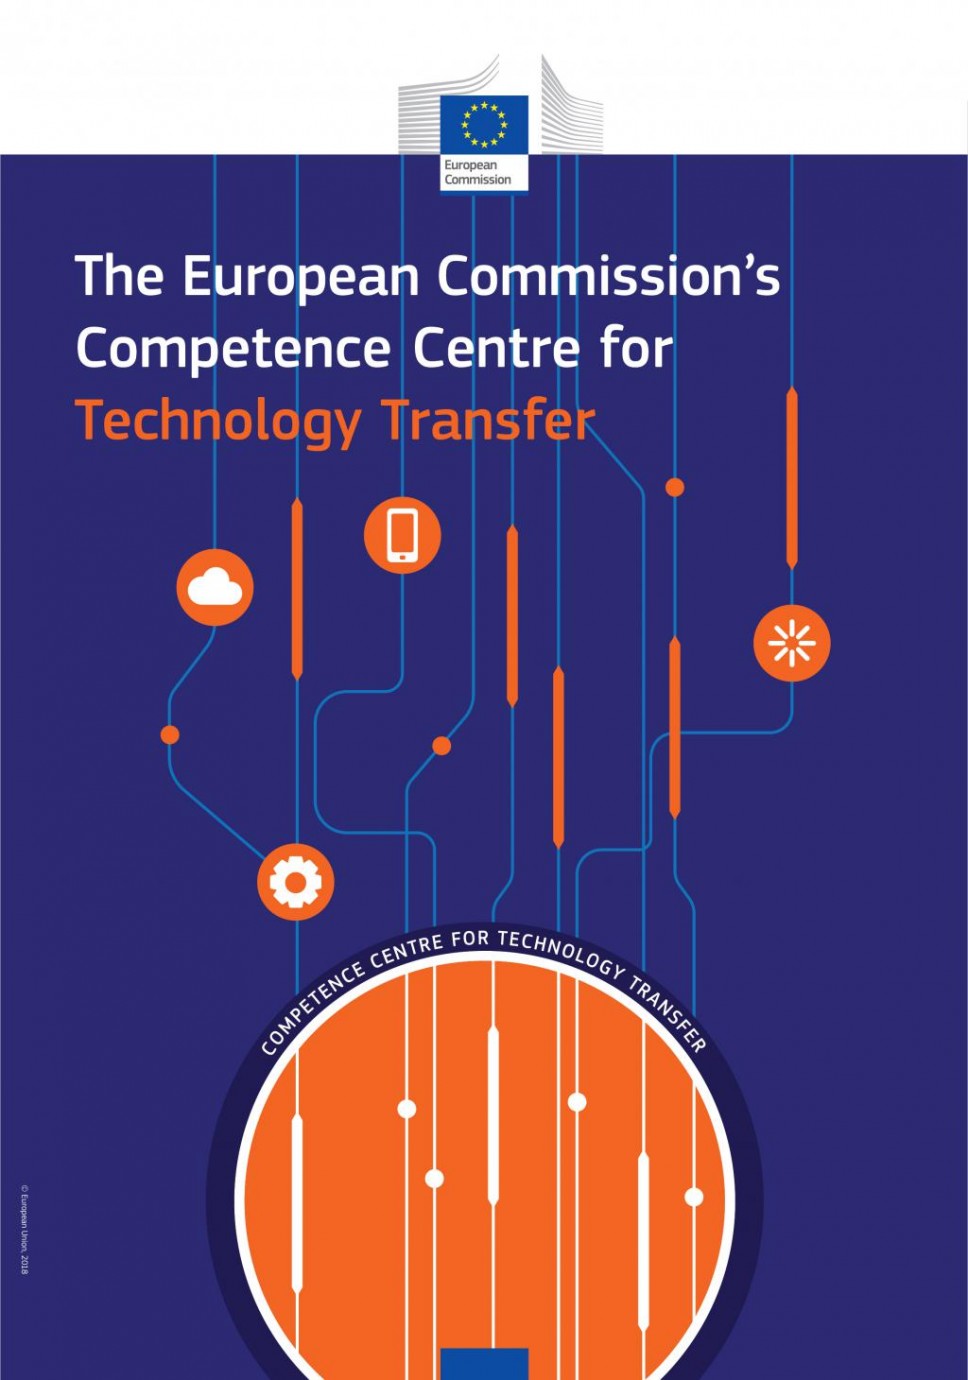 Centar kompetencija za transfer tehnologija Evropske komisije: događaj iniciranja rada Centra, 14.12.2021